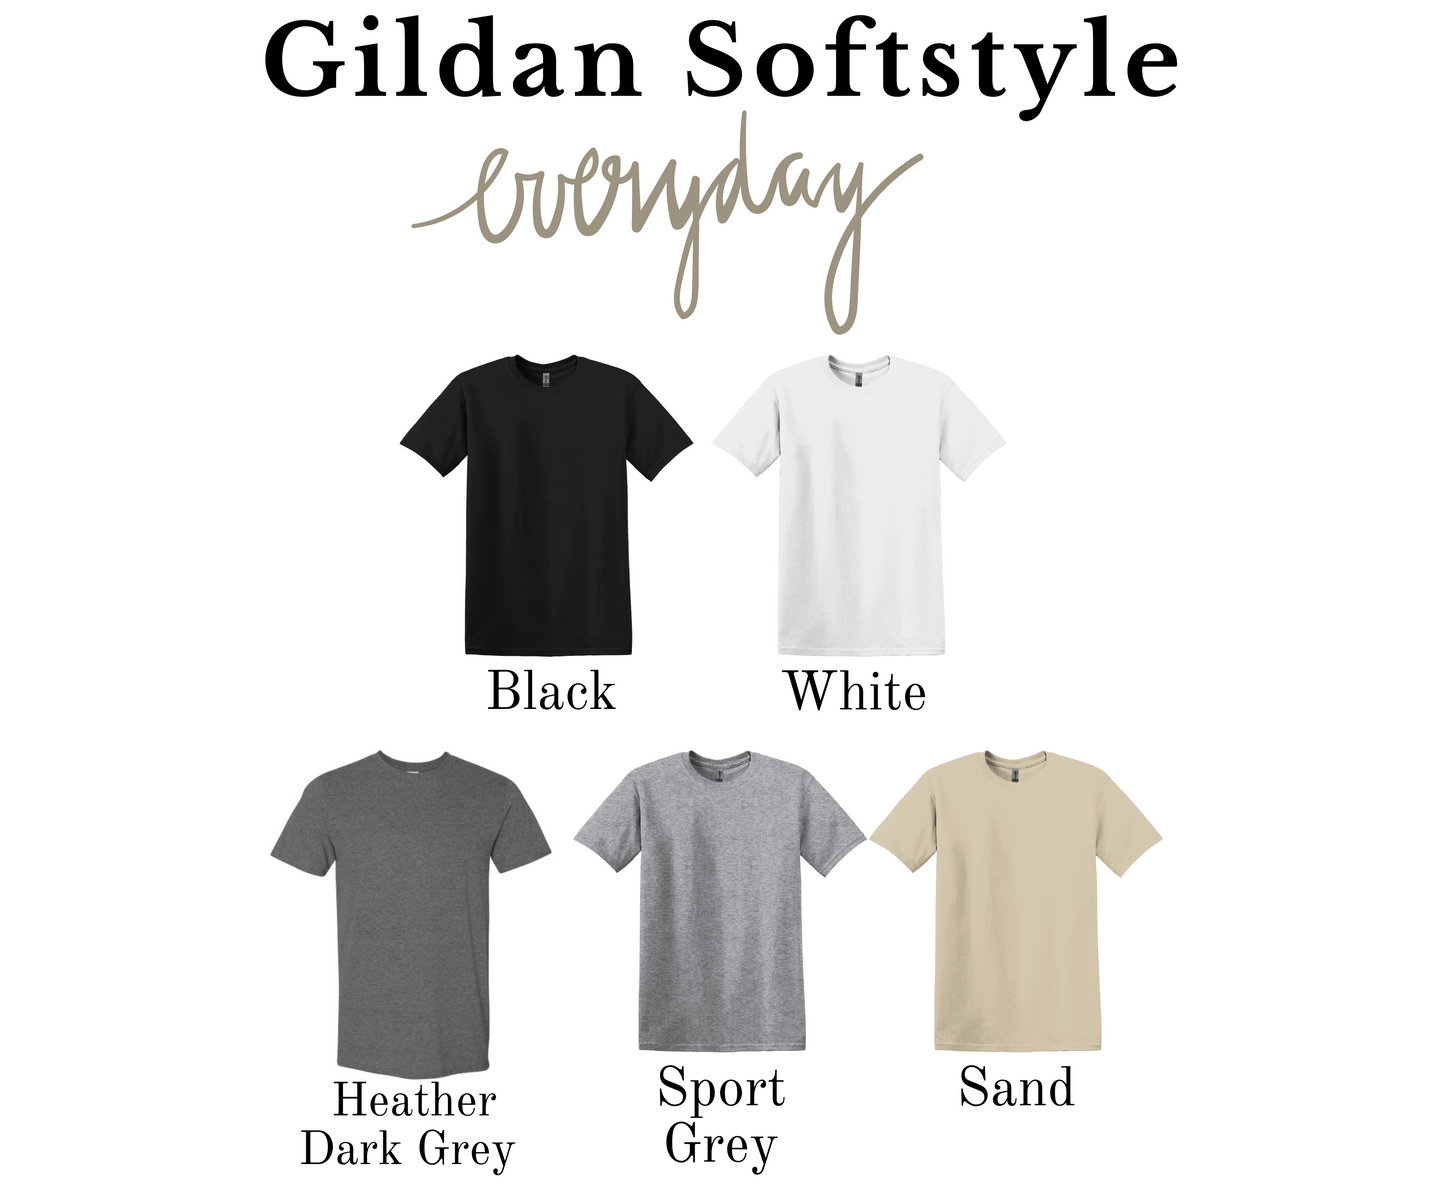 Game Day Eagles Gildan Softstyle Sweatshirt or T-shirt